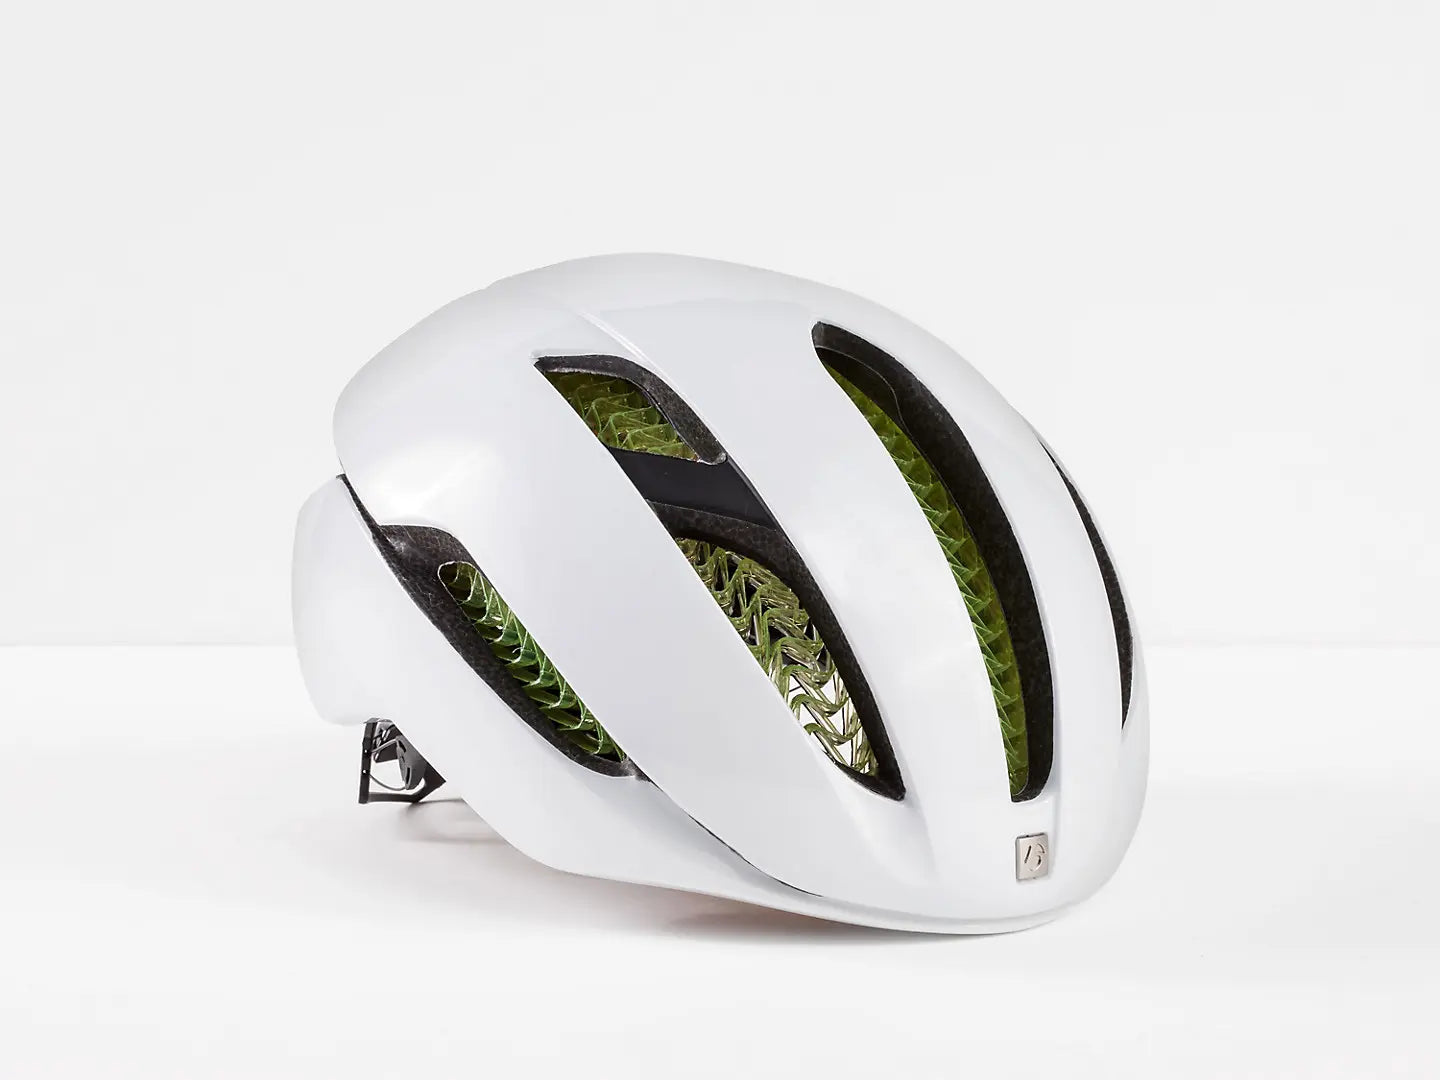 Helmet Bontrager 3X WaveCel Road Wheels Bikes